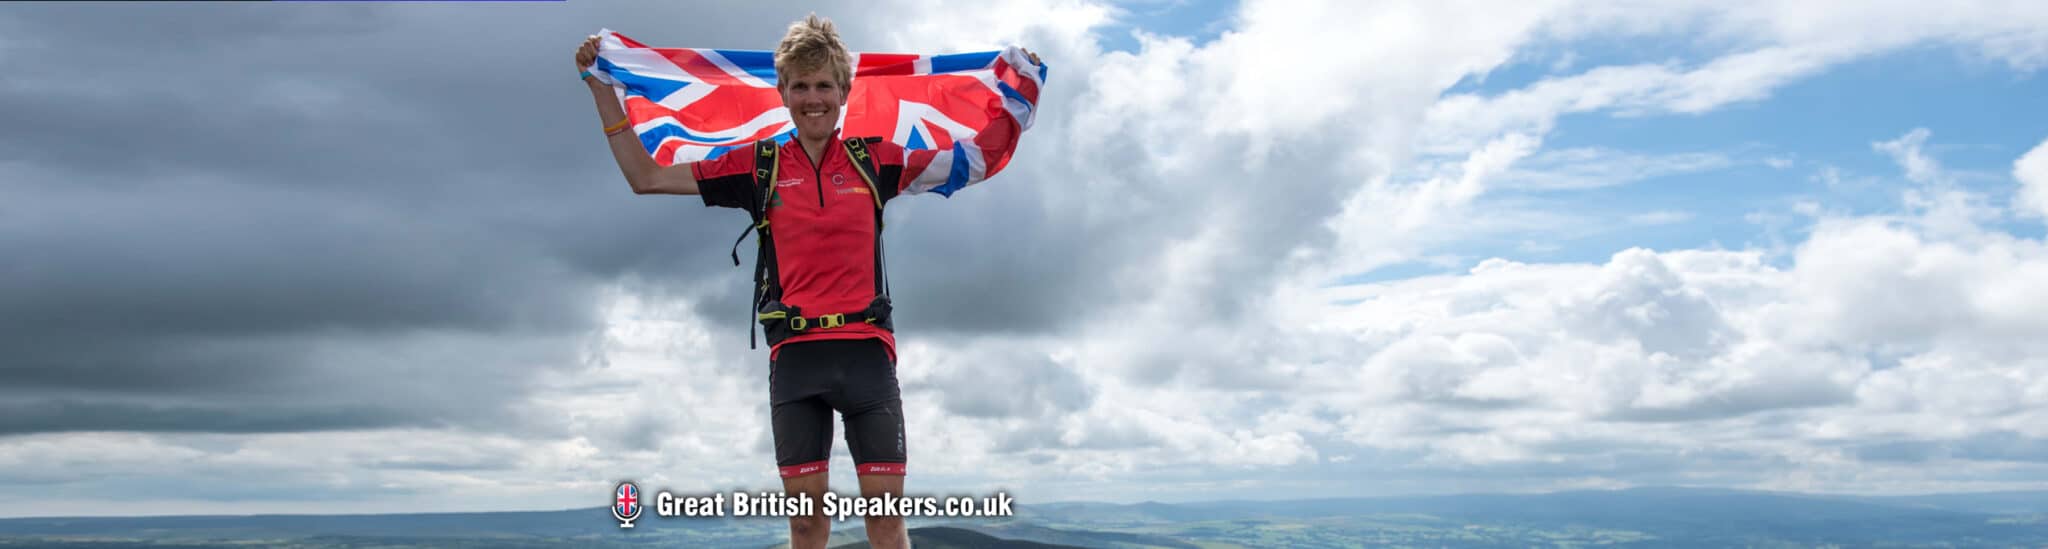 Alex Staniforth National Three Peaks Challenge Run Mental Health Fundraiser motivational speaker book at Great British Speakers